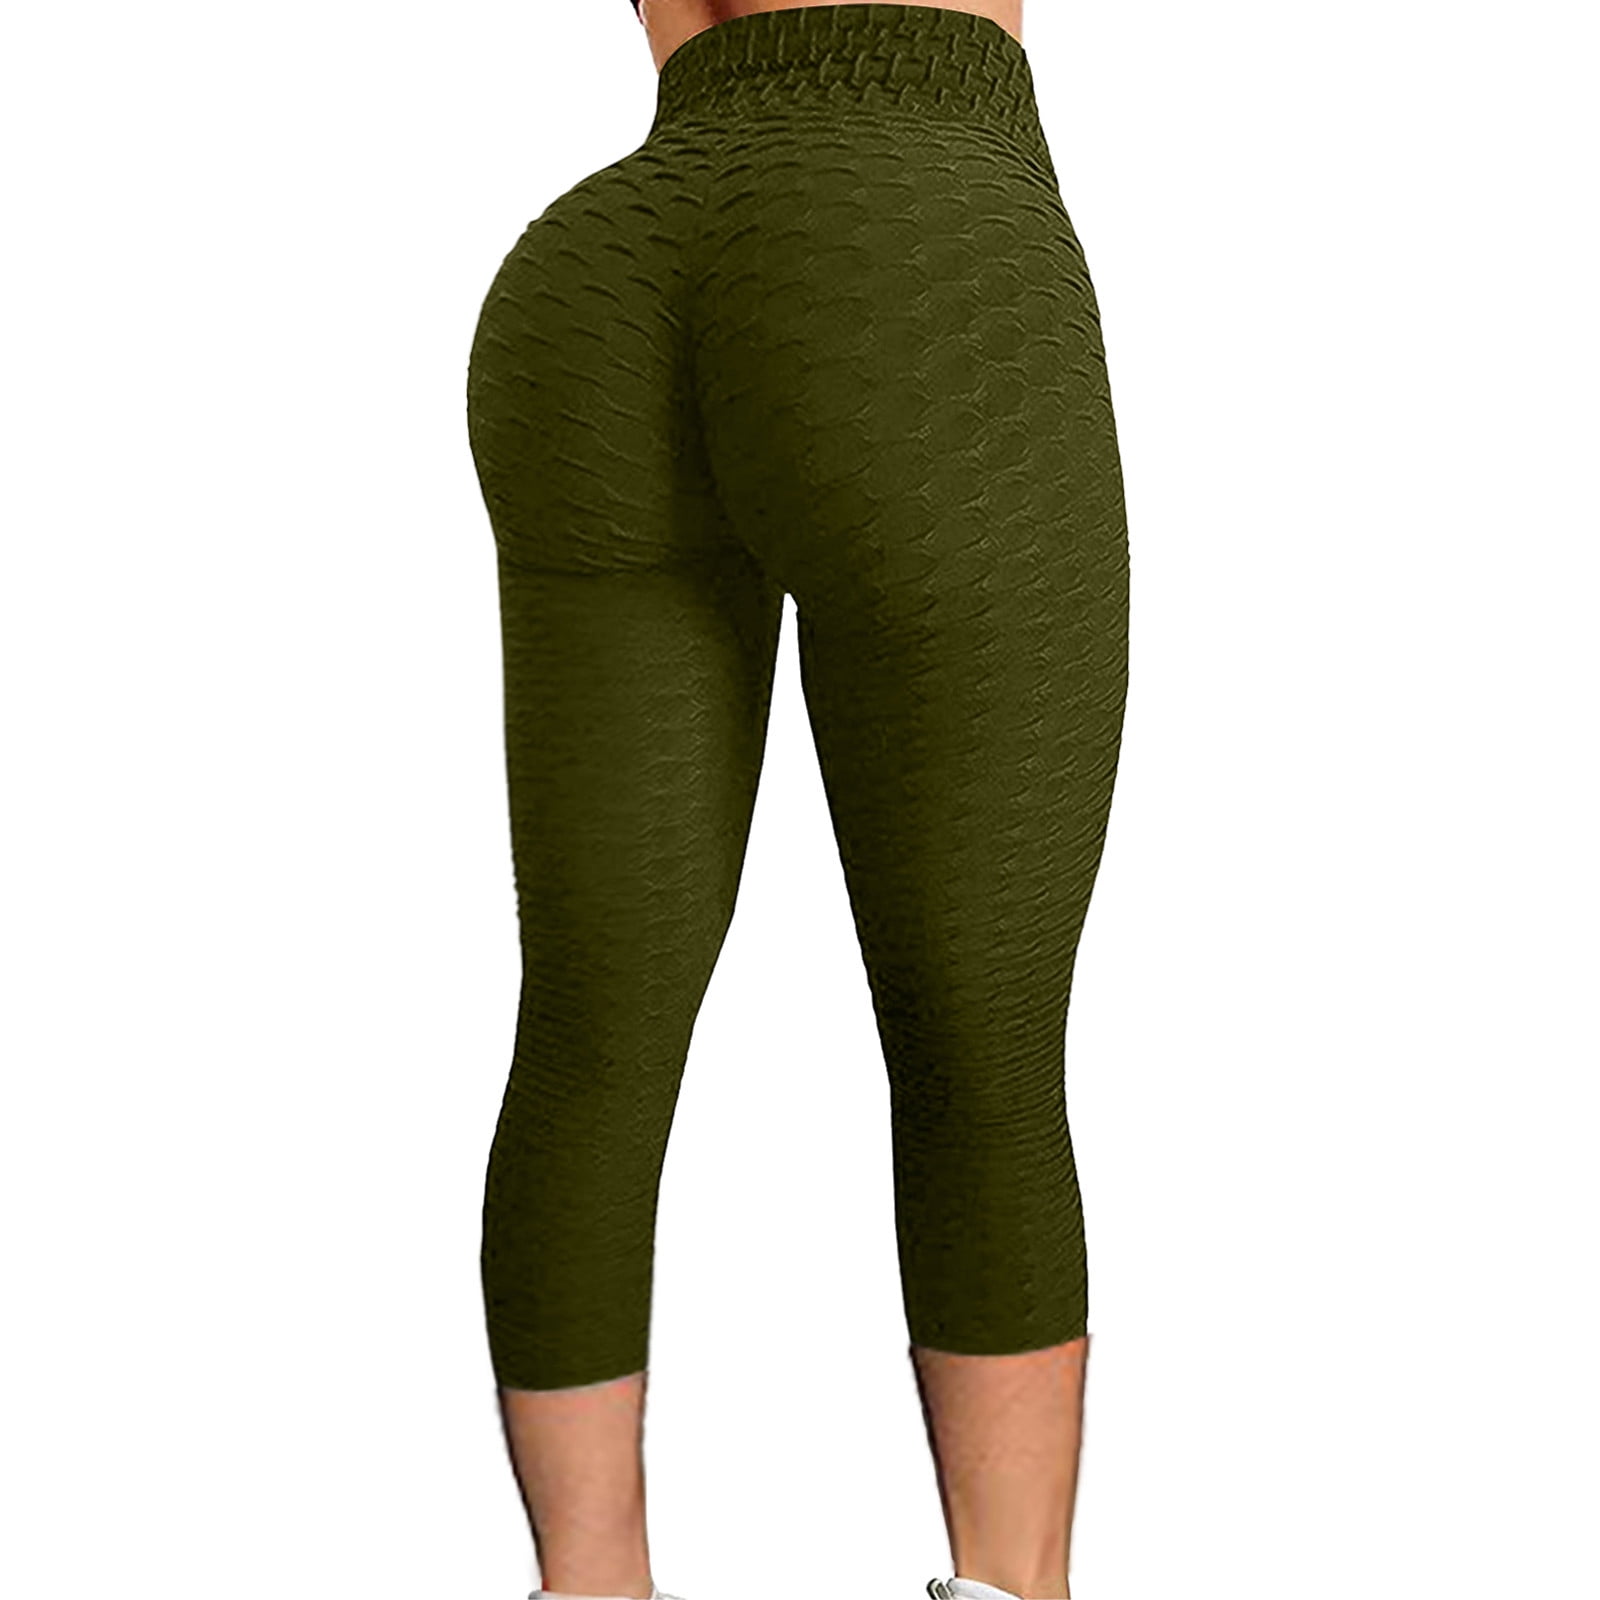 Cathalem Yoga Pants for Women Petite Length Exercise Yoga Waist Bubble  Running Yoga Pants for Women Tall Length Mesh Lift Pants Army Green Small 